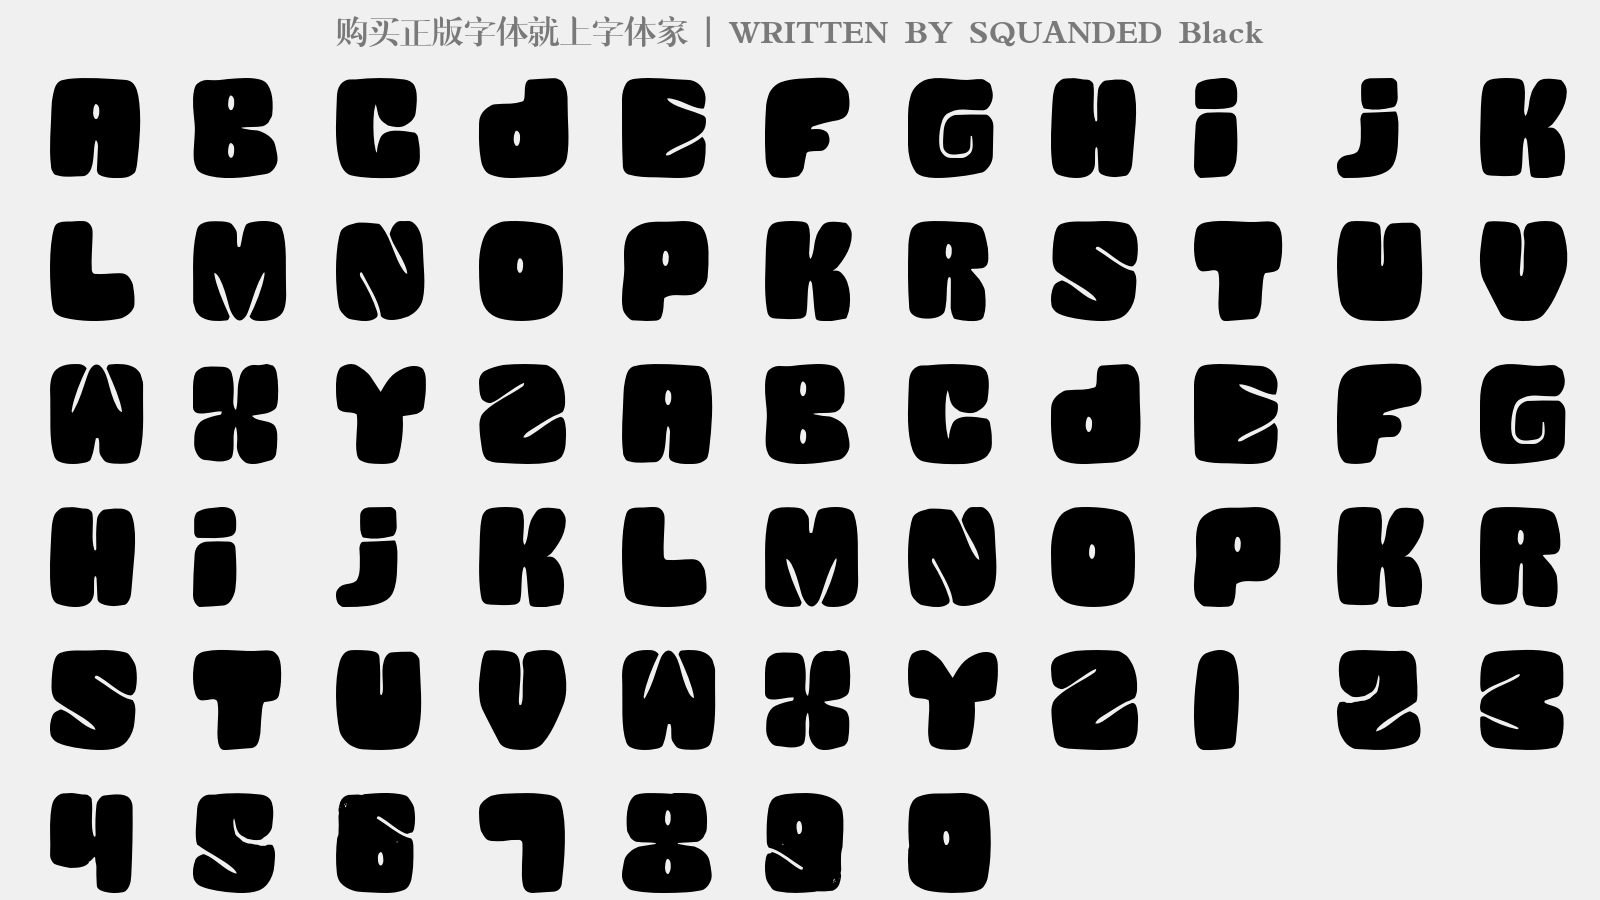 SQUANDED Black - 大写字母/小写字母/数字